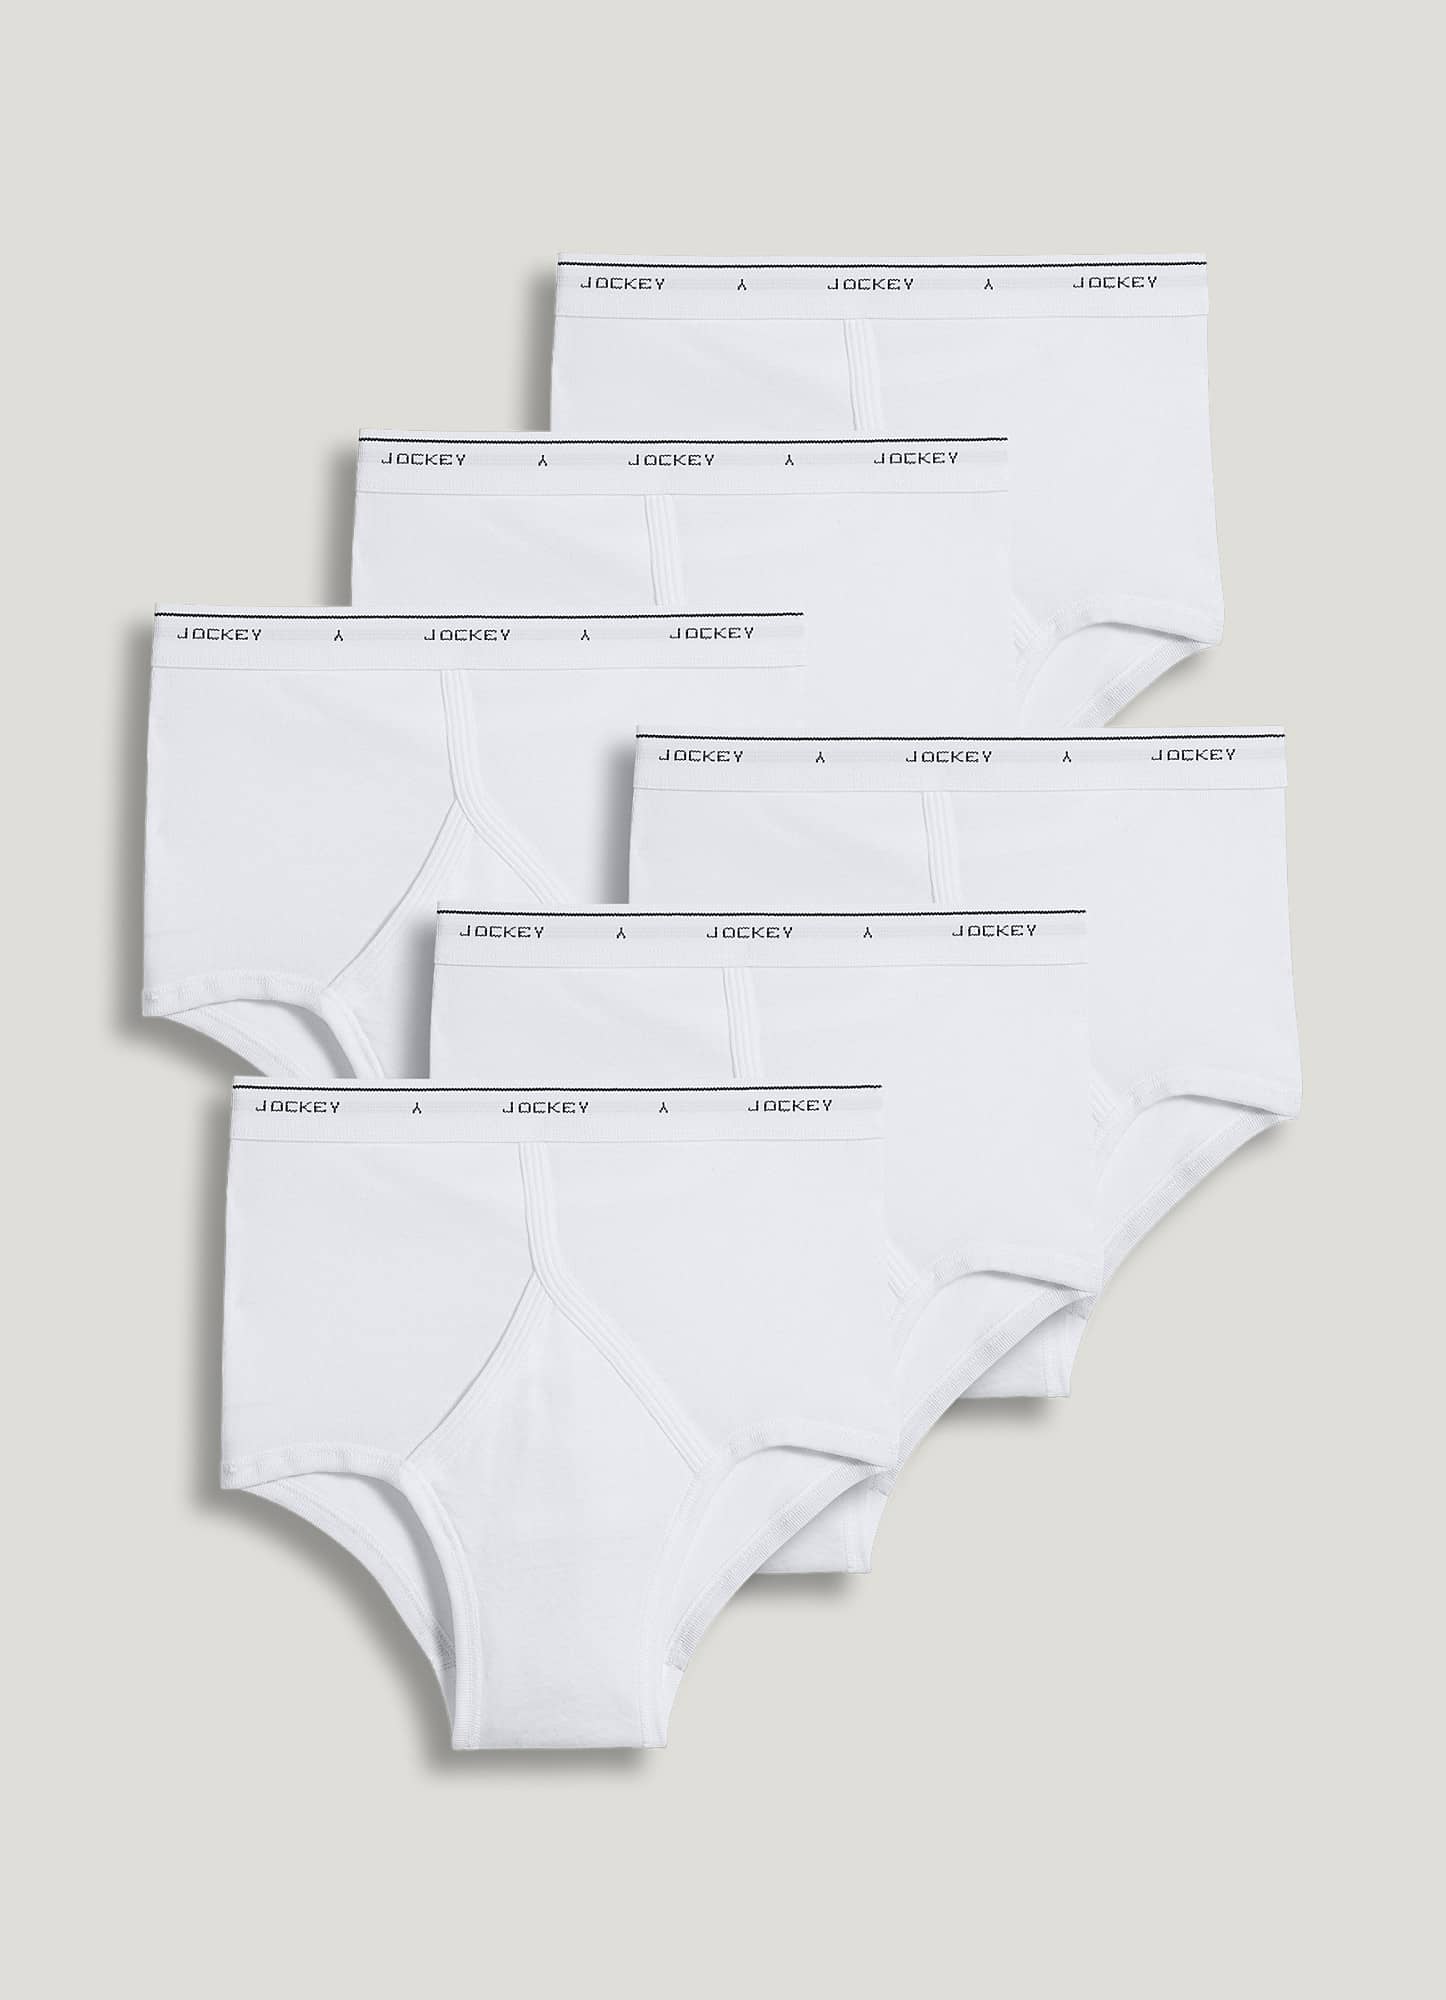 Jockey Men's Underwear Classic Big Man Brief- 2 Pack